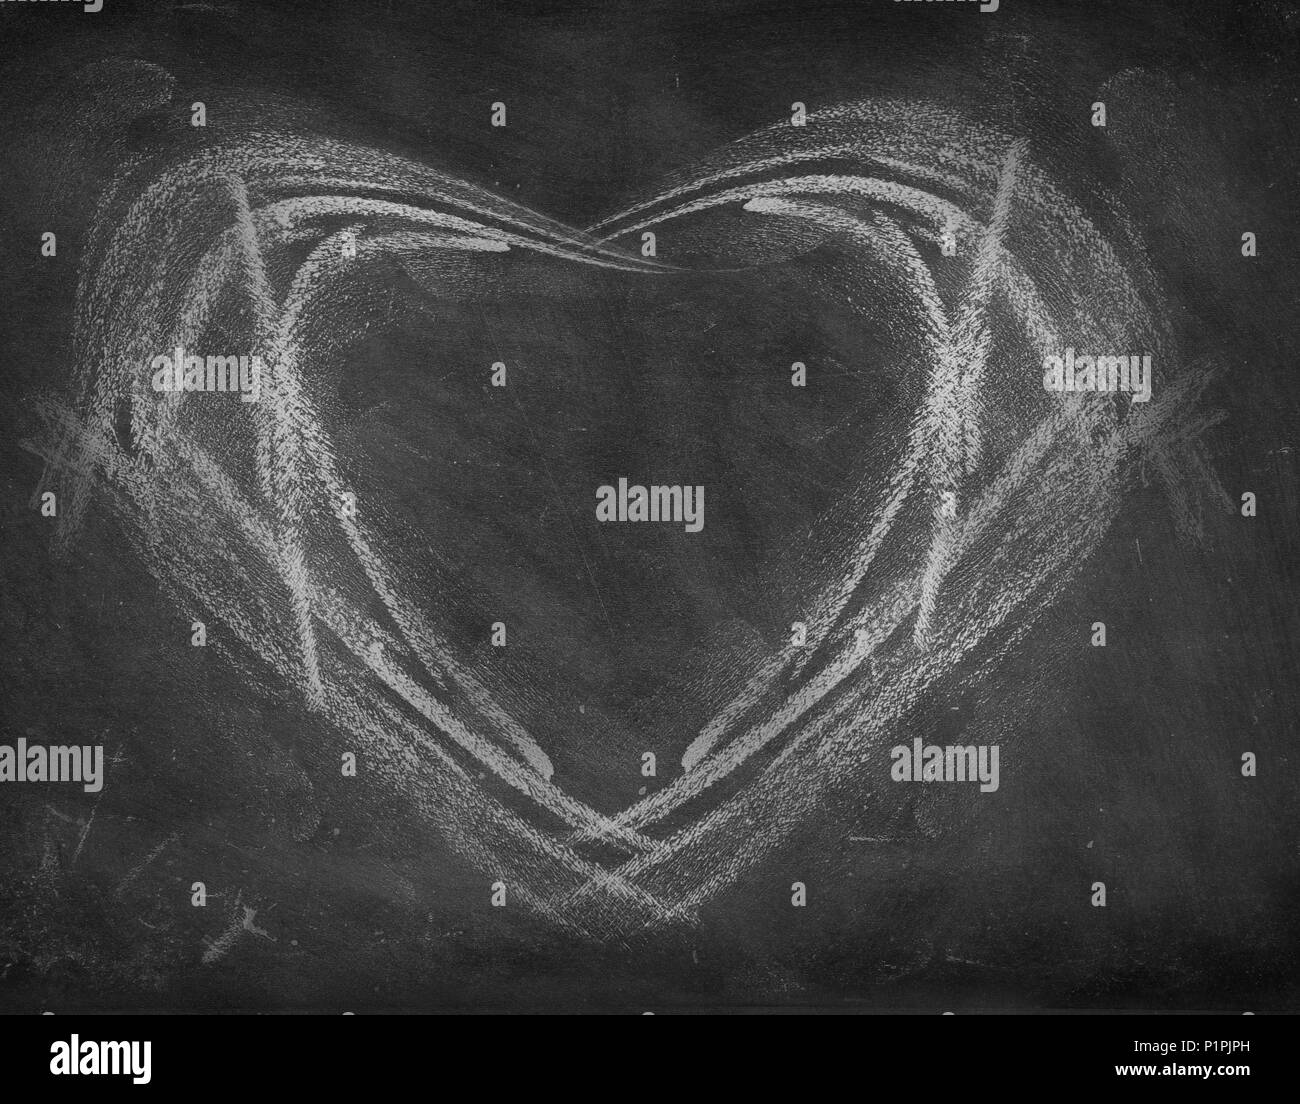 Heart drawn on black board Stock Photo